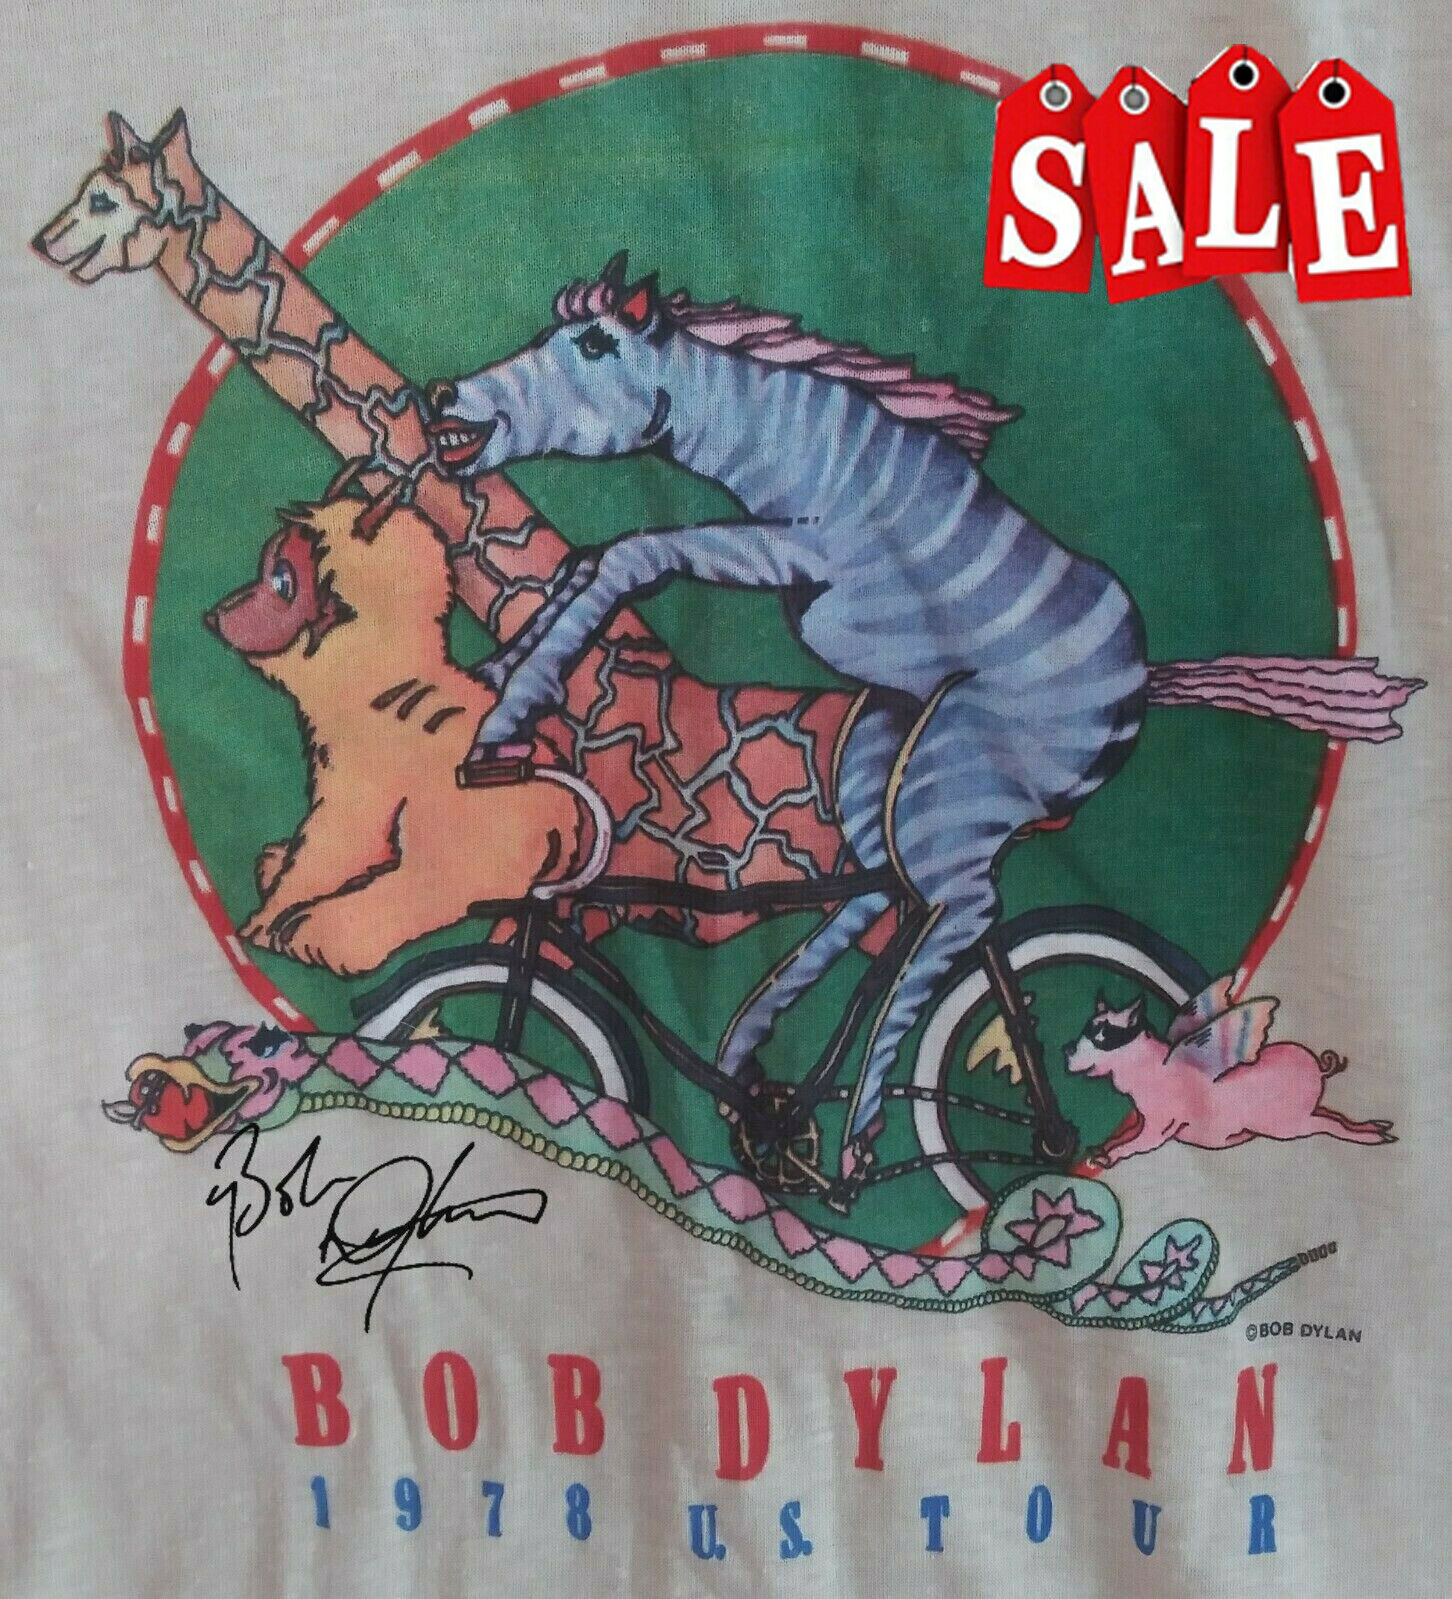 Vintage 1978 US Tour BOB DYLAN Shirt Short Sleeve White Unisex S-5XL S273